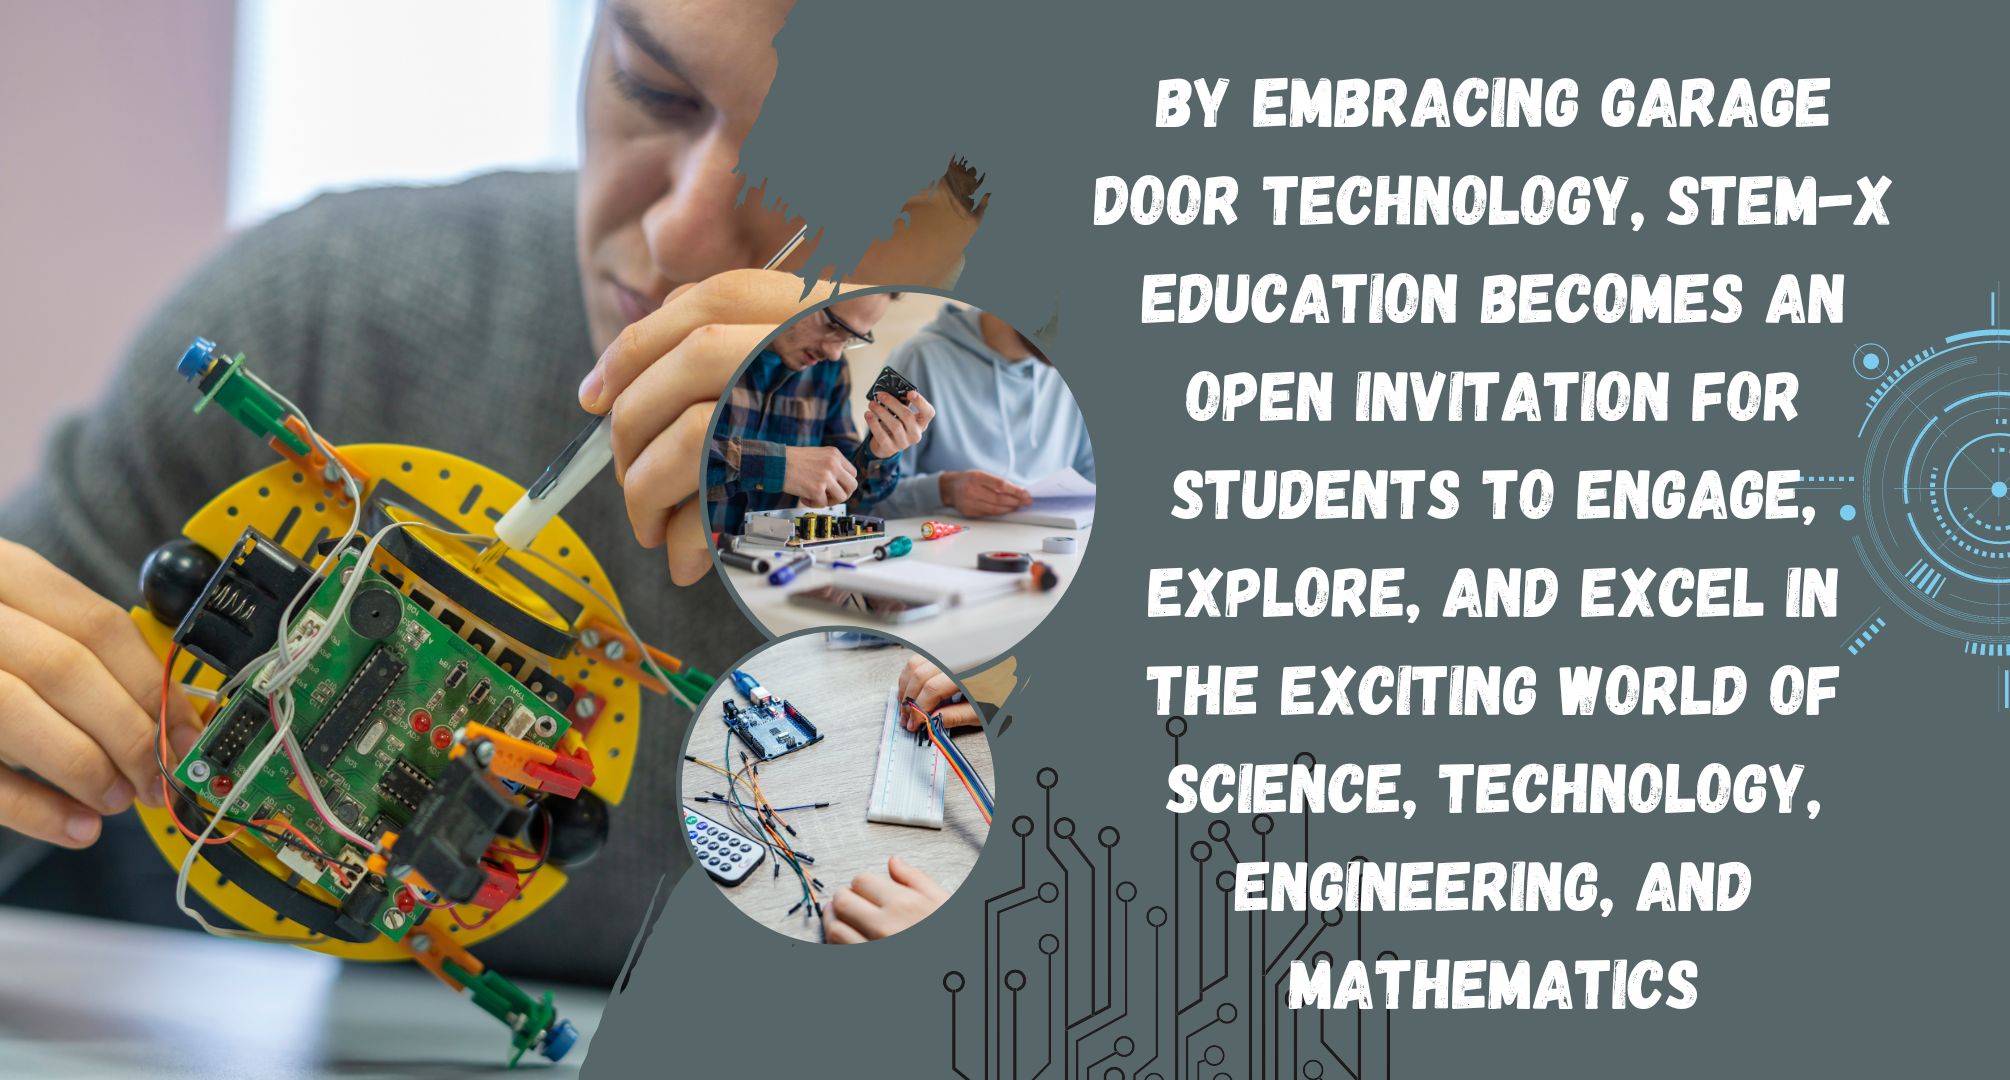 Opening Doors to Opportunity Garage Door Technology Enhances STEM-X Education